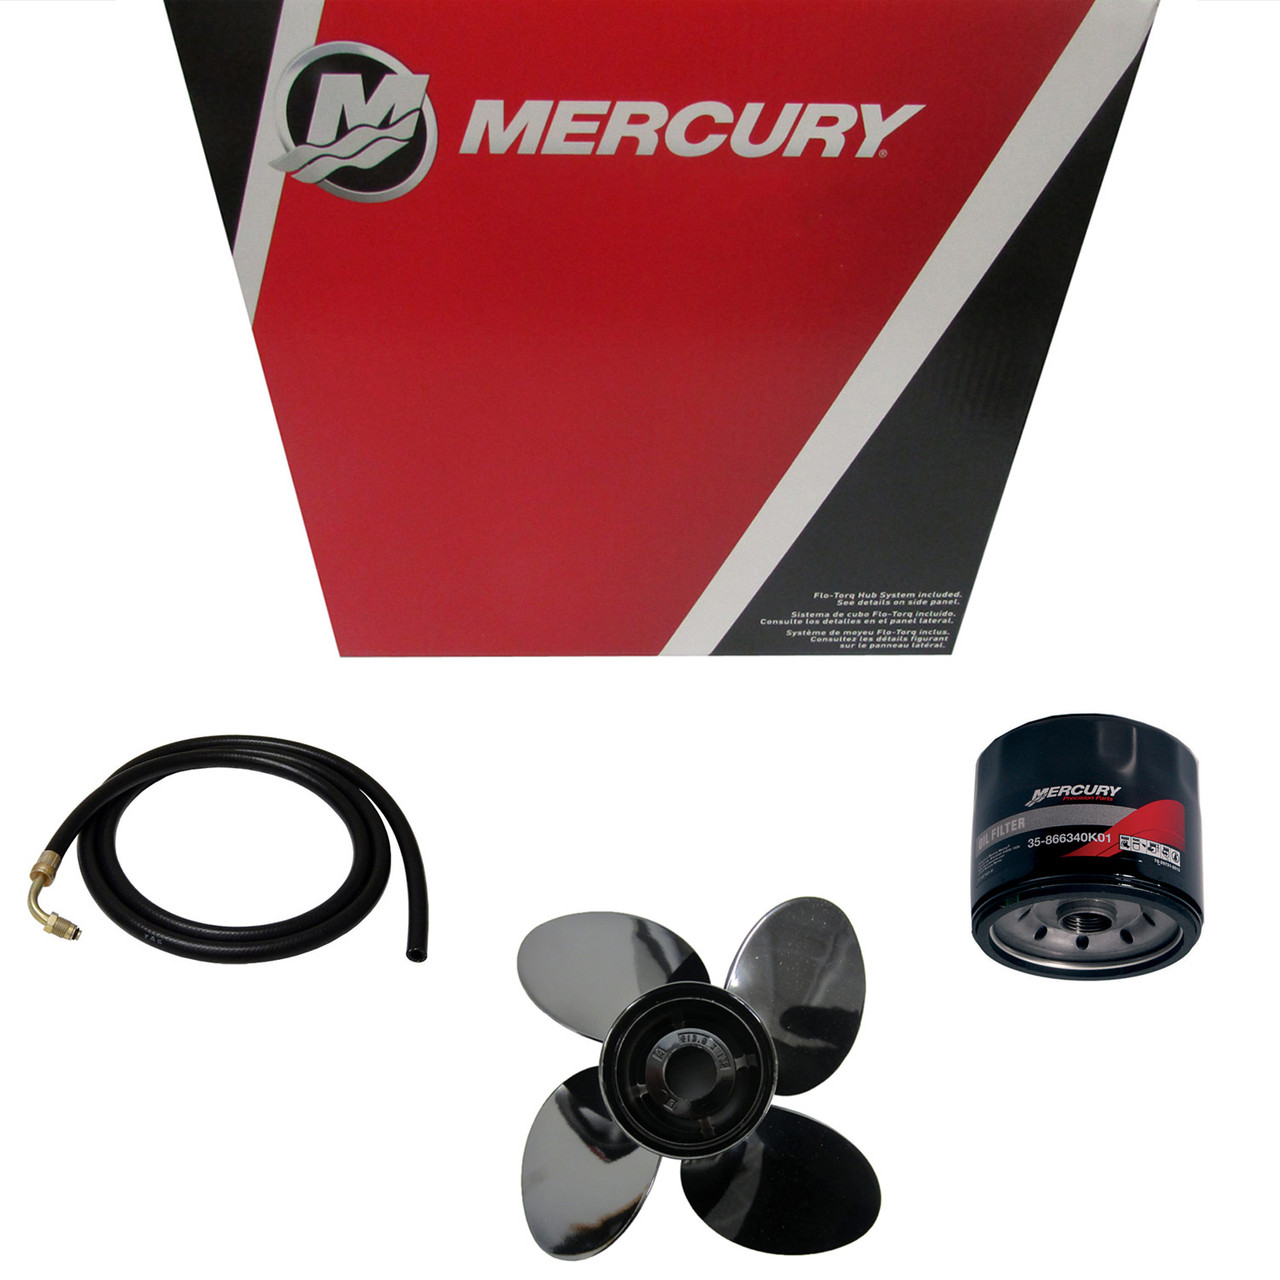 Mercury Marine/Mercruiser  New OEM ADAPTOR KIT 35-818400A1